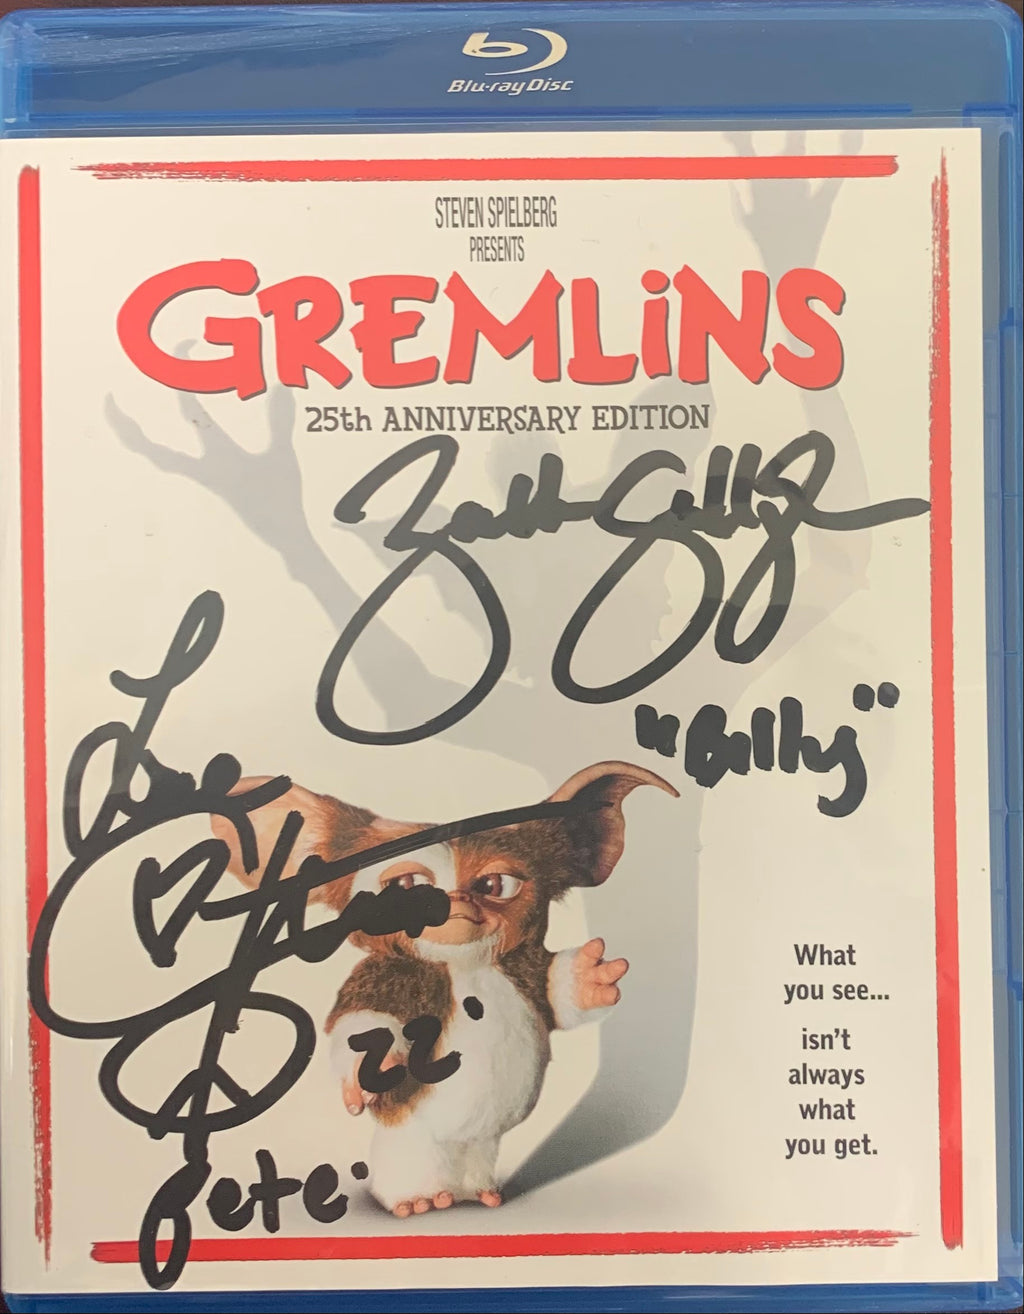 Corey Feldman Zach Galligan signed inscribed Blu-Ray cover Gremlins JSA Witness